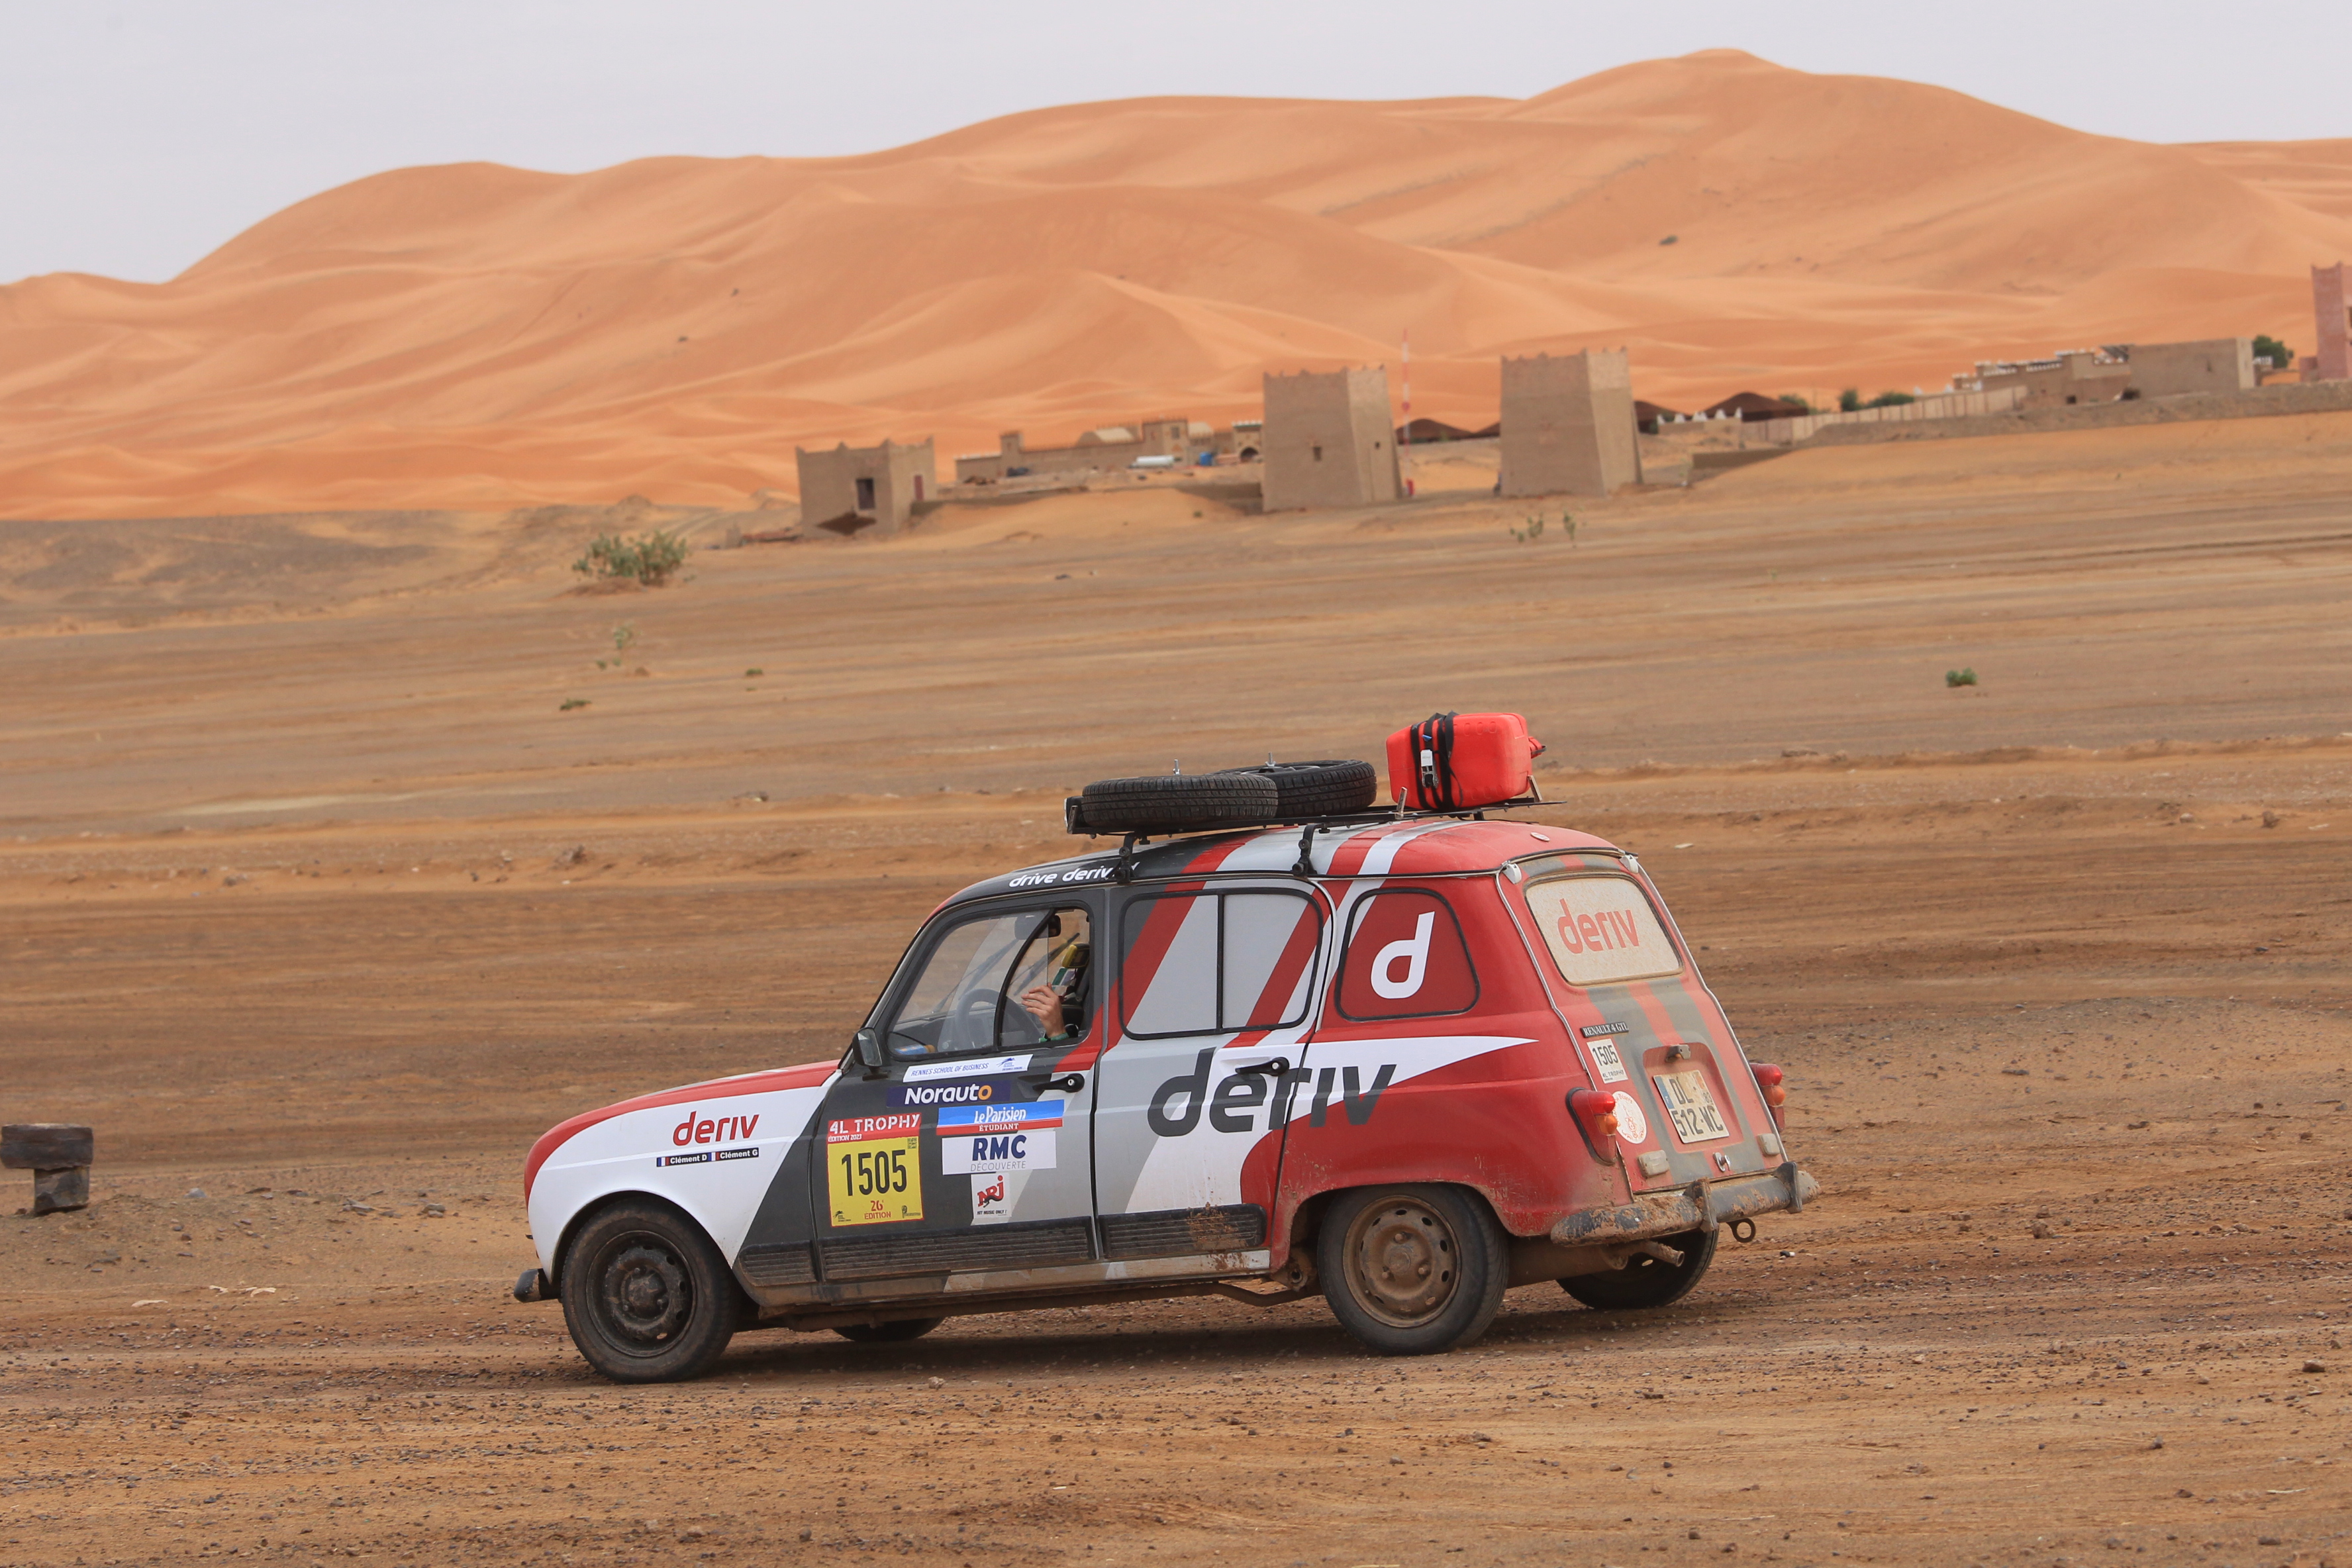 Deriv humanitarian ride through the desert in Morocco.